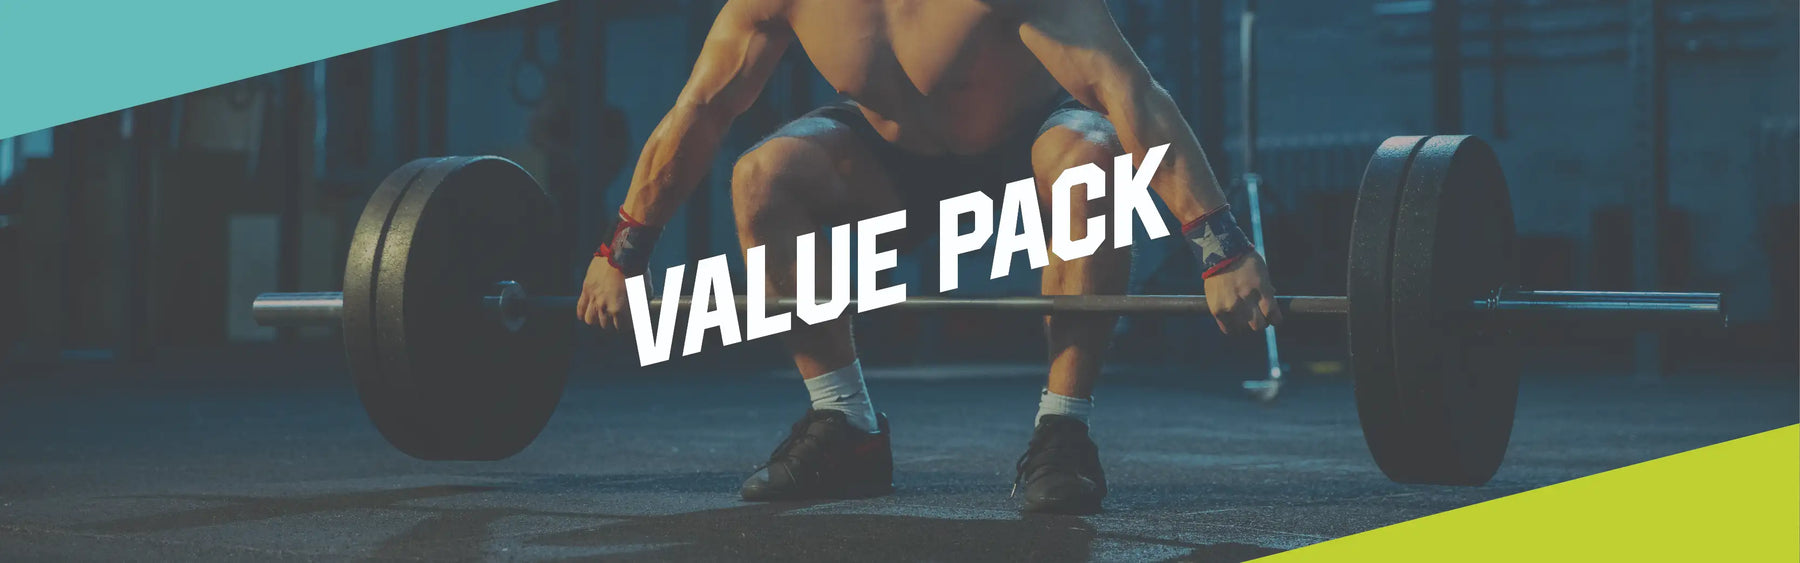 Value pack